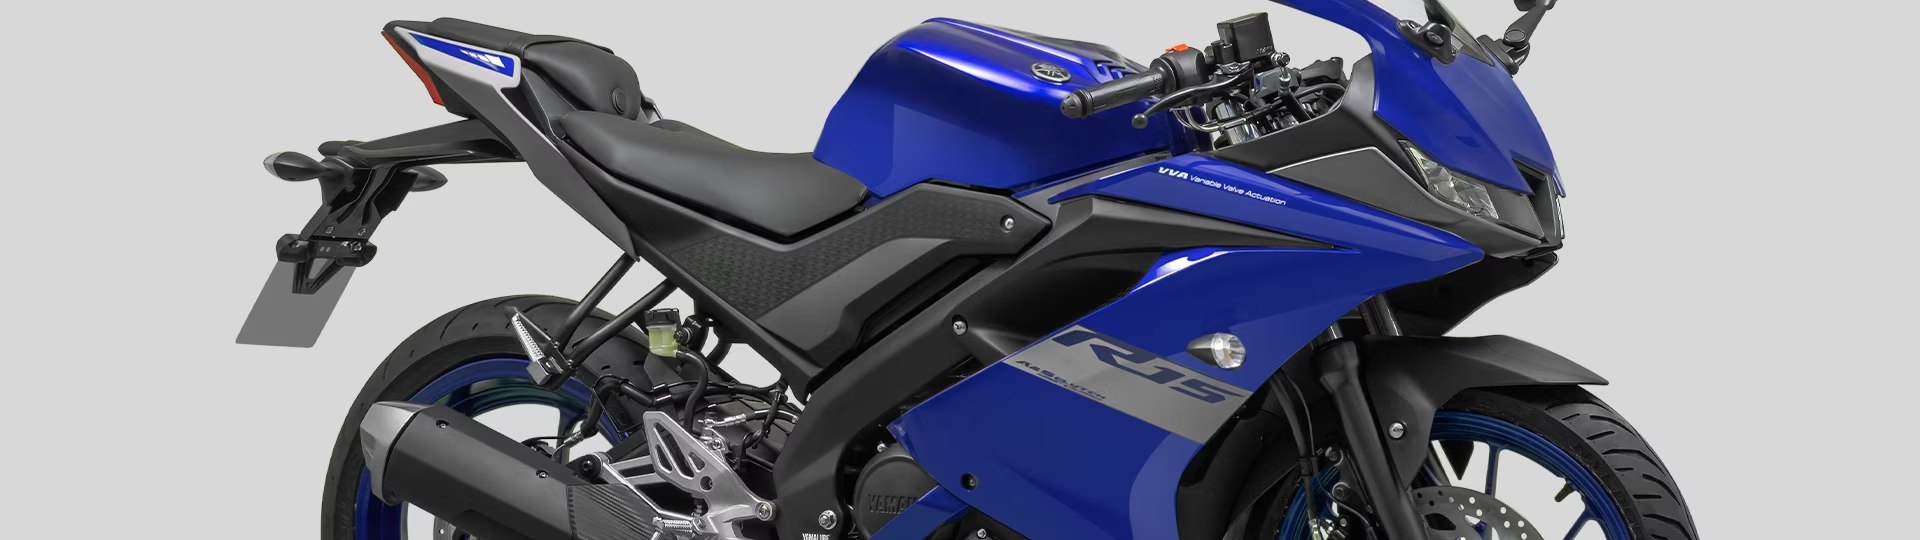 Foto de detalhe da moto da Yamaha 